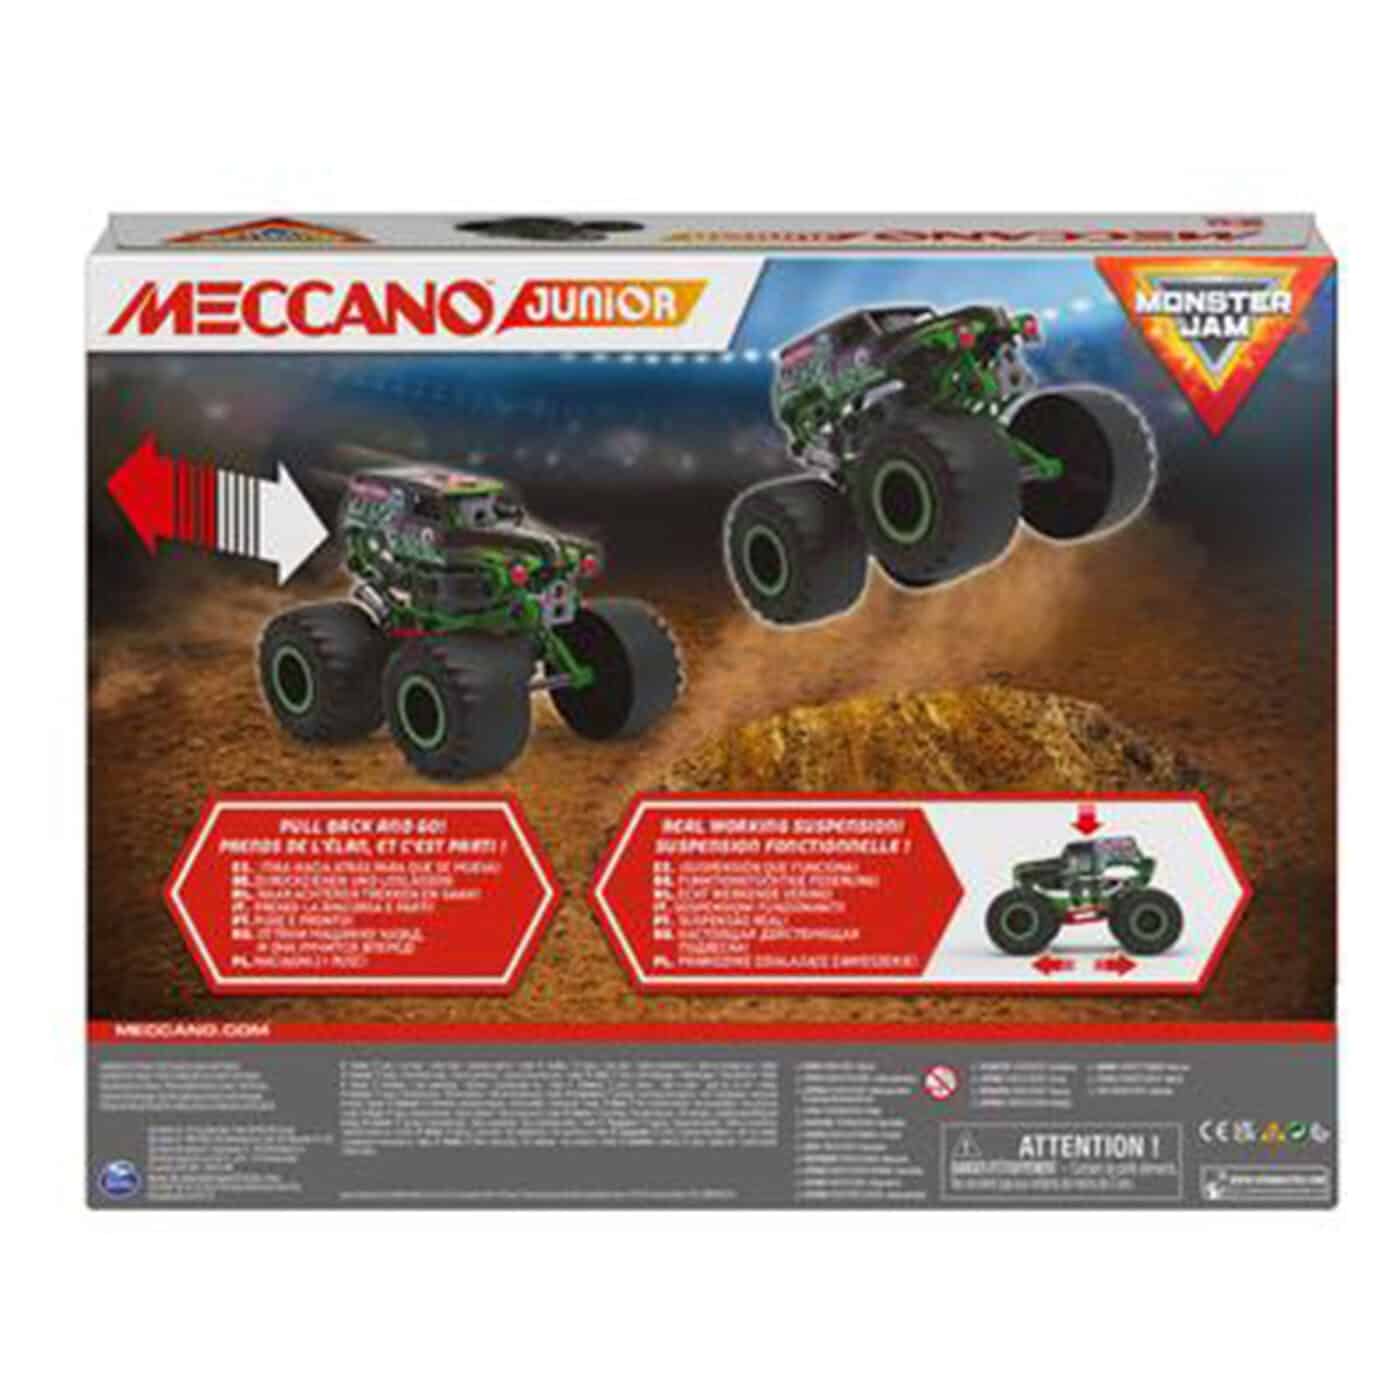 Meccano-Junior-Monster-Jam-Truck